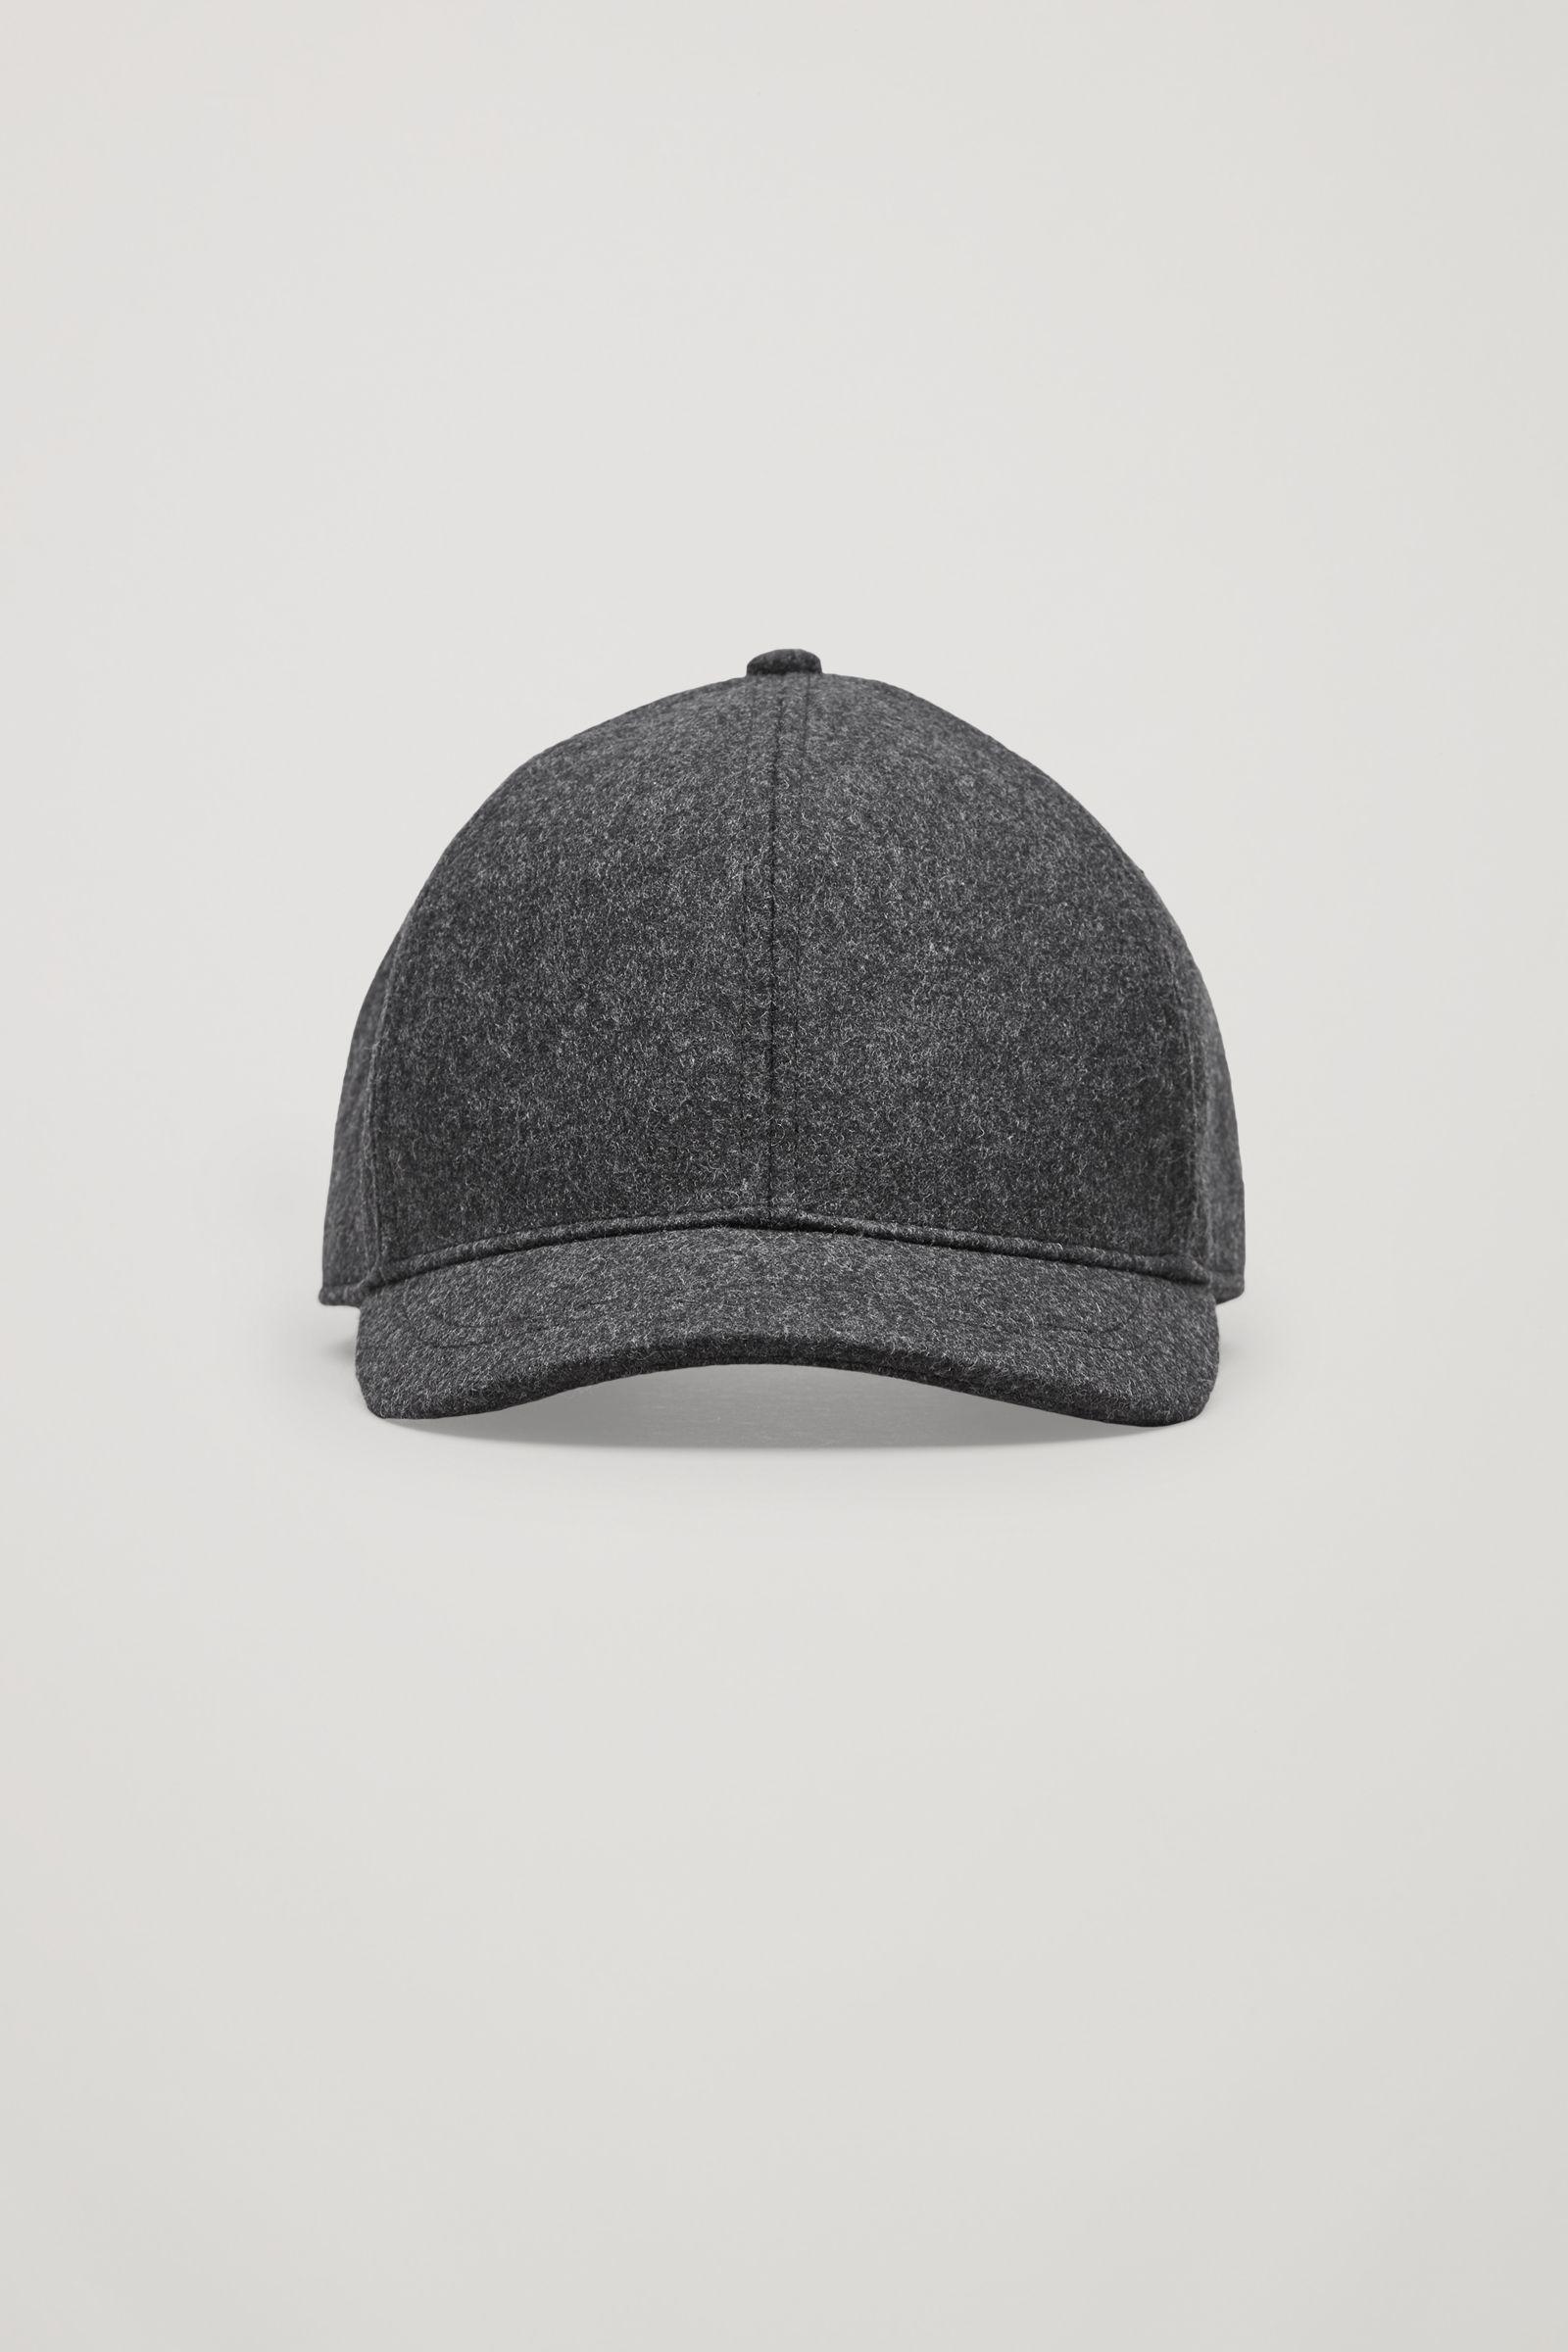 COS Short Peak Wool Cap in Grey (Gray) for Men - Lyst